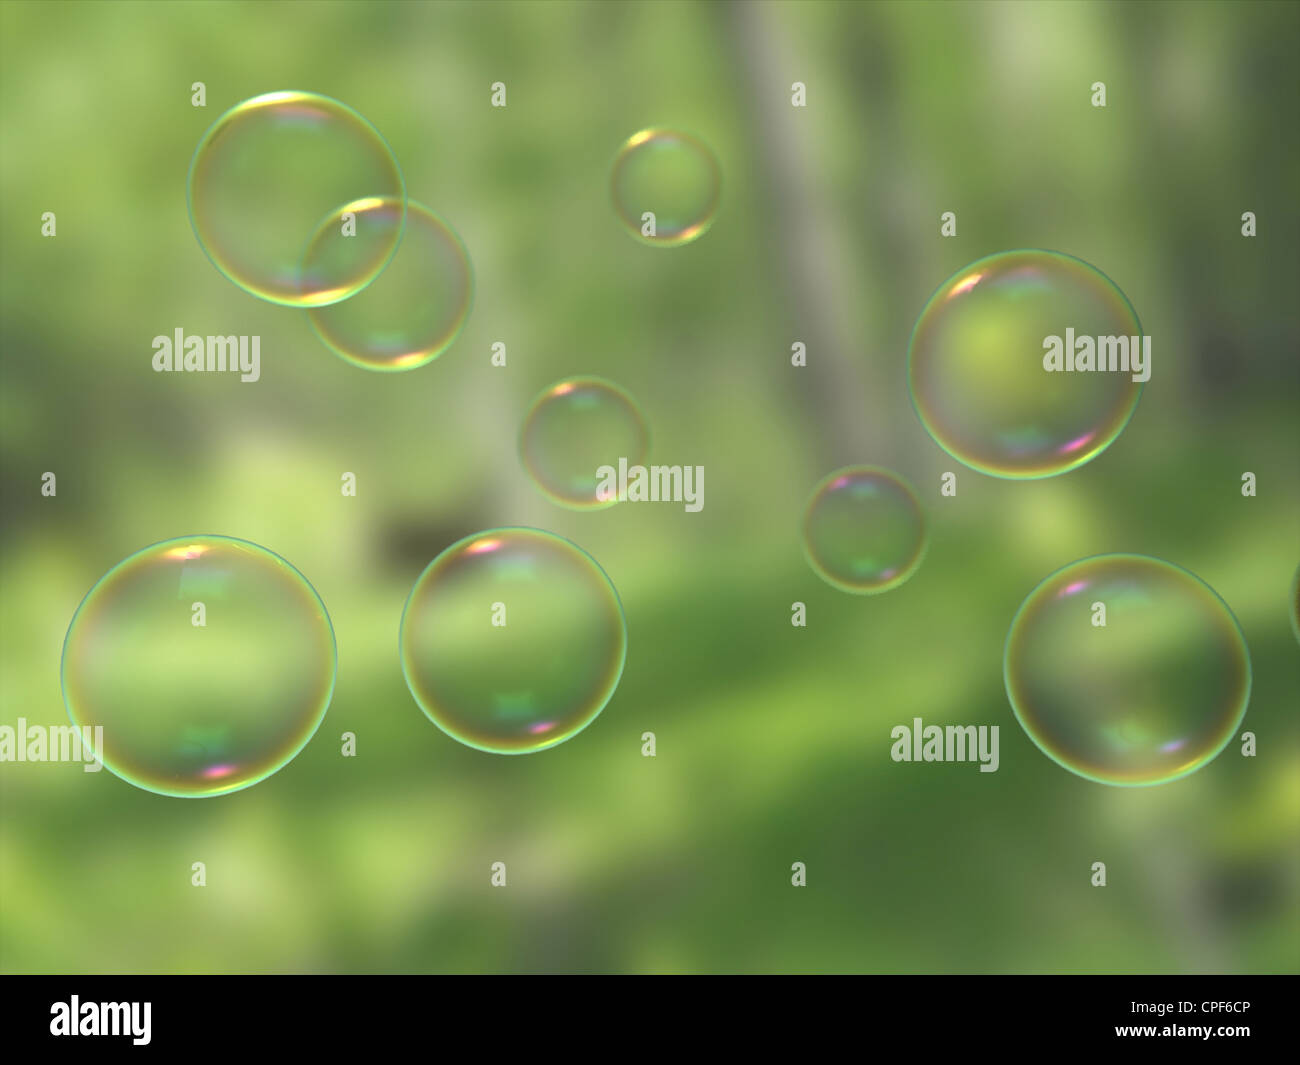 Soap bubbles on blur background wallpaper Stock Photo